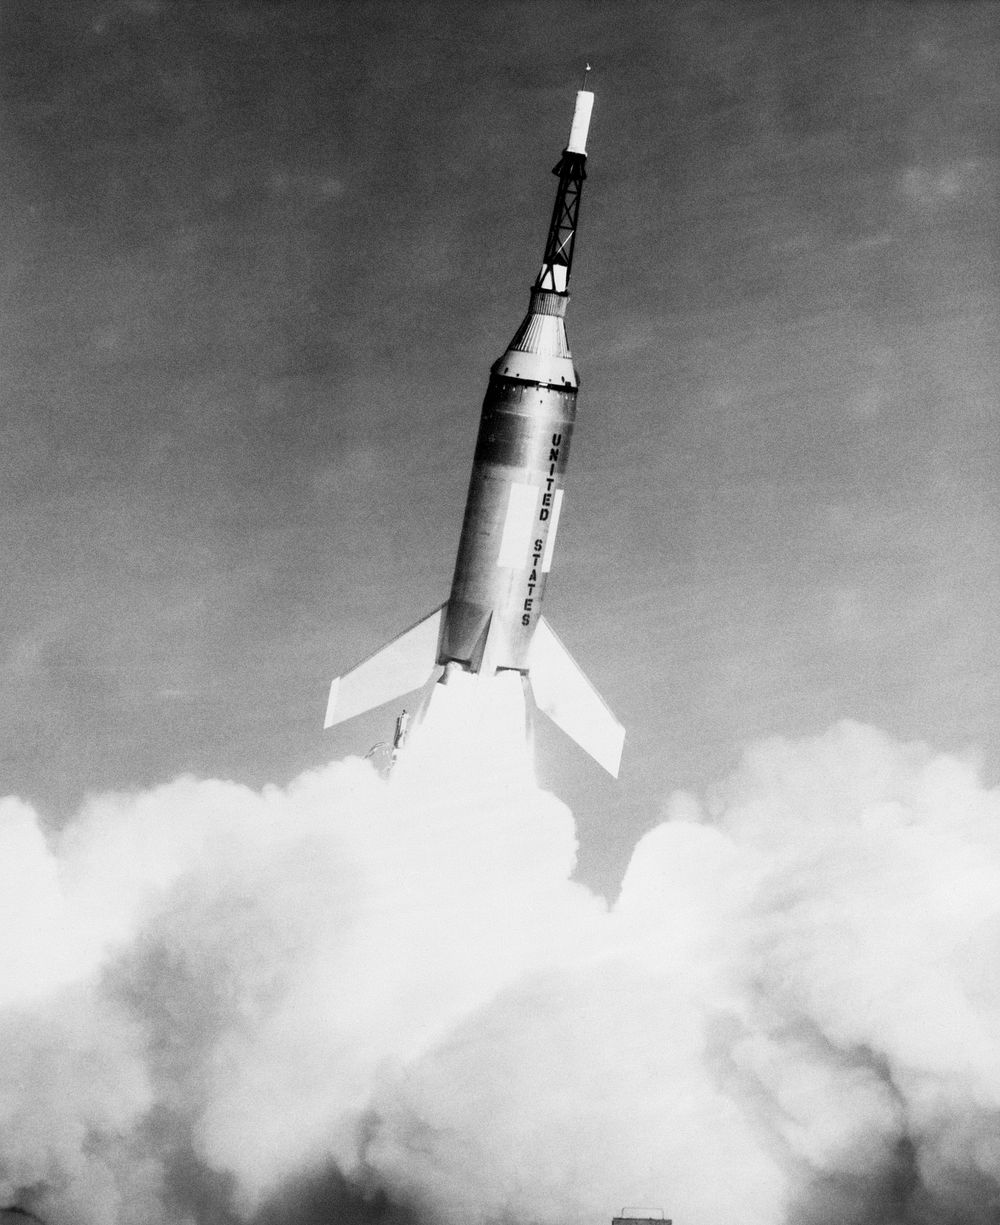 Launch of Little Joe-2 from Wallops Island carrying Mercury spacecraft test article. Original from NASA. Digitally enhanced…